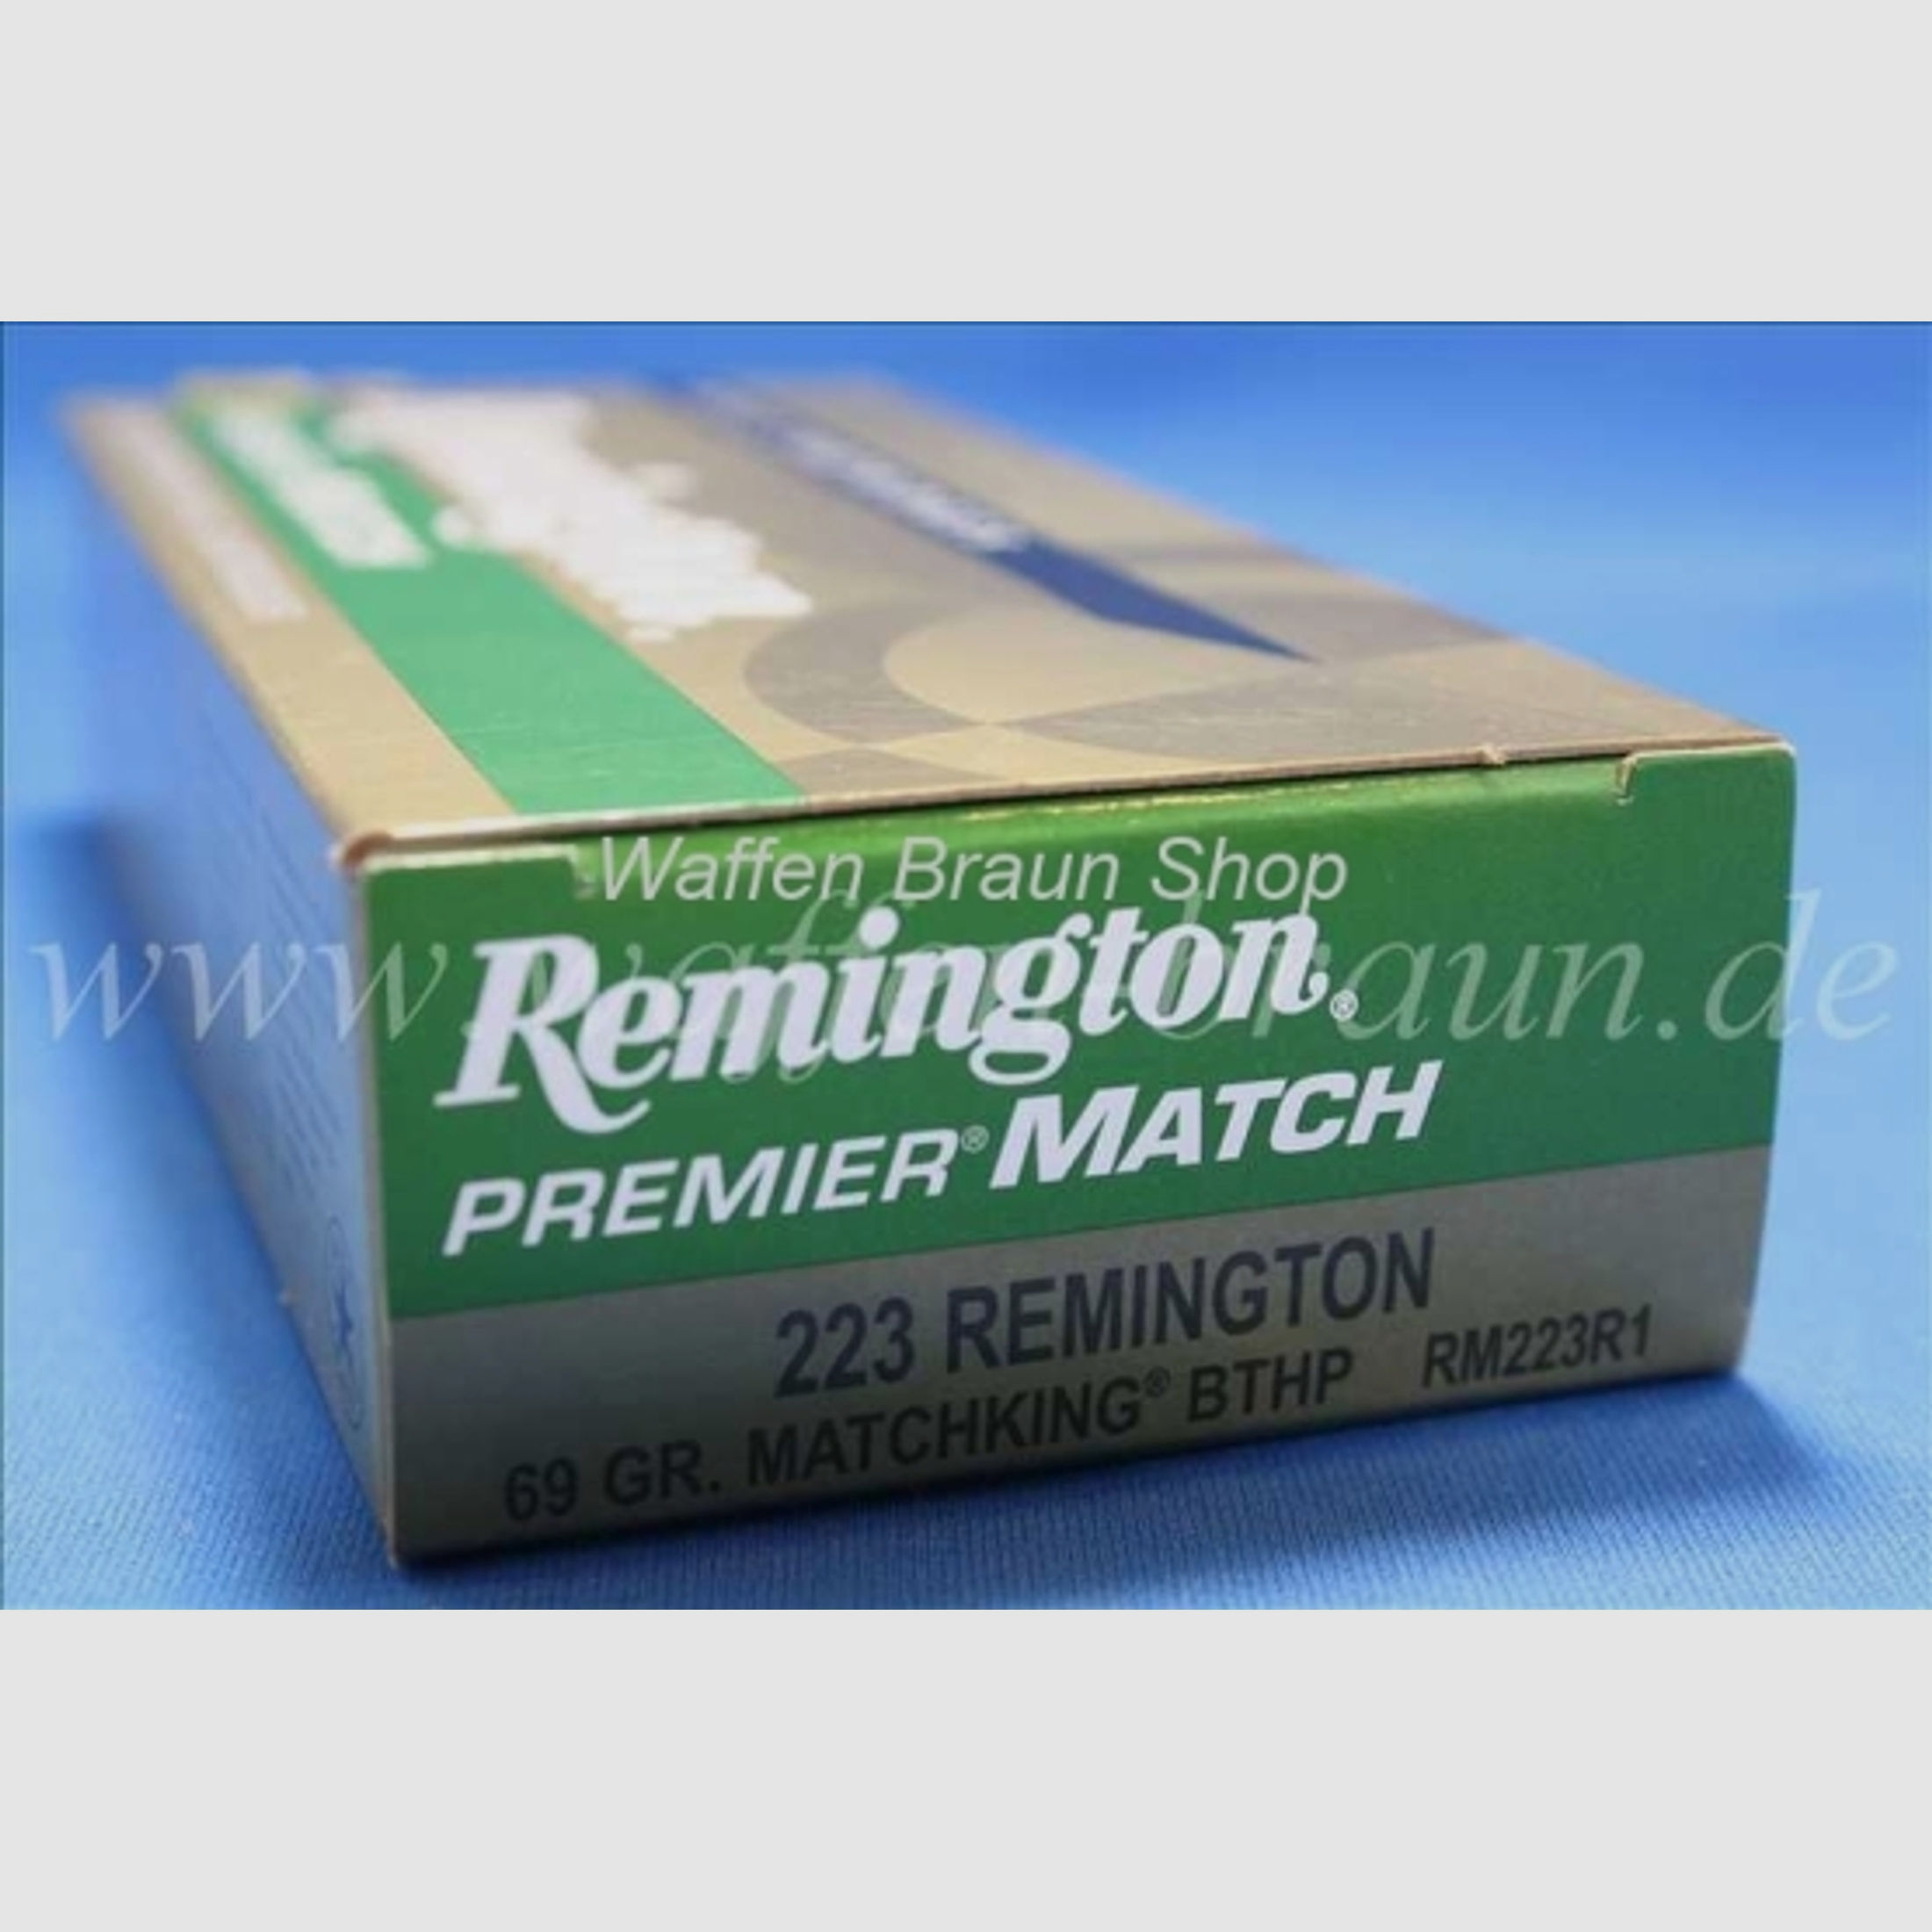 Remington .223 BTHP 69 grain 20 Stk #RM223R1